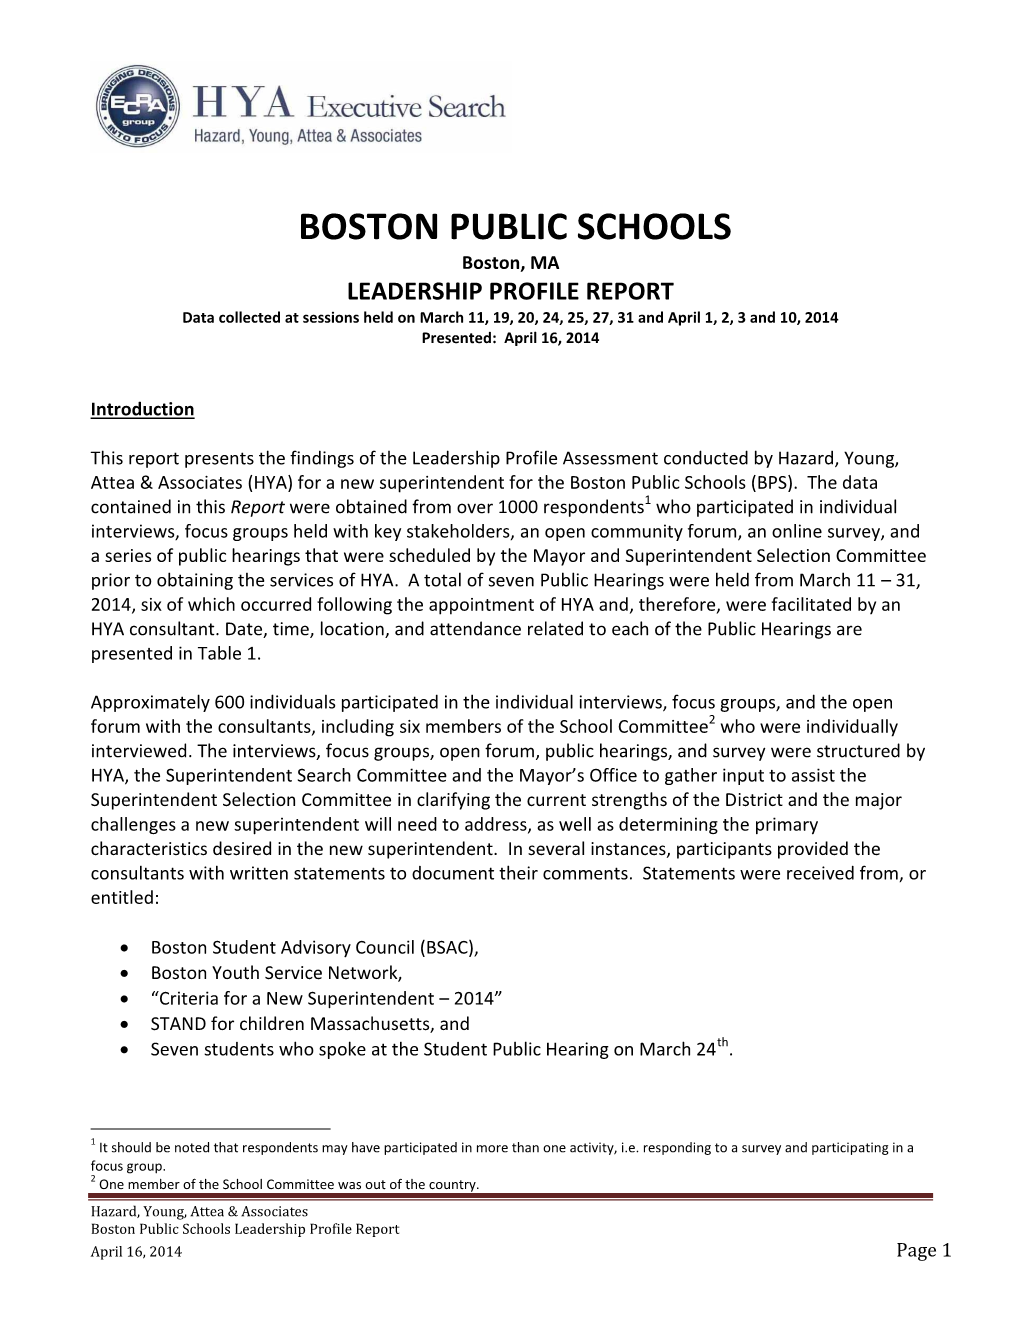 Boston Public Schools Superintendent of Schools Desired Characteristics